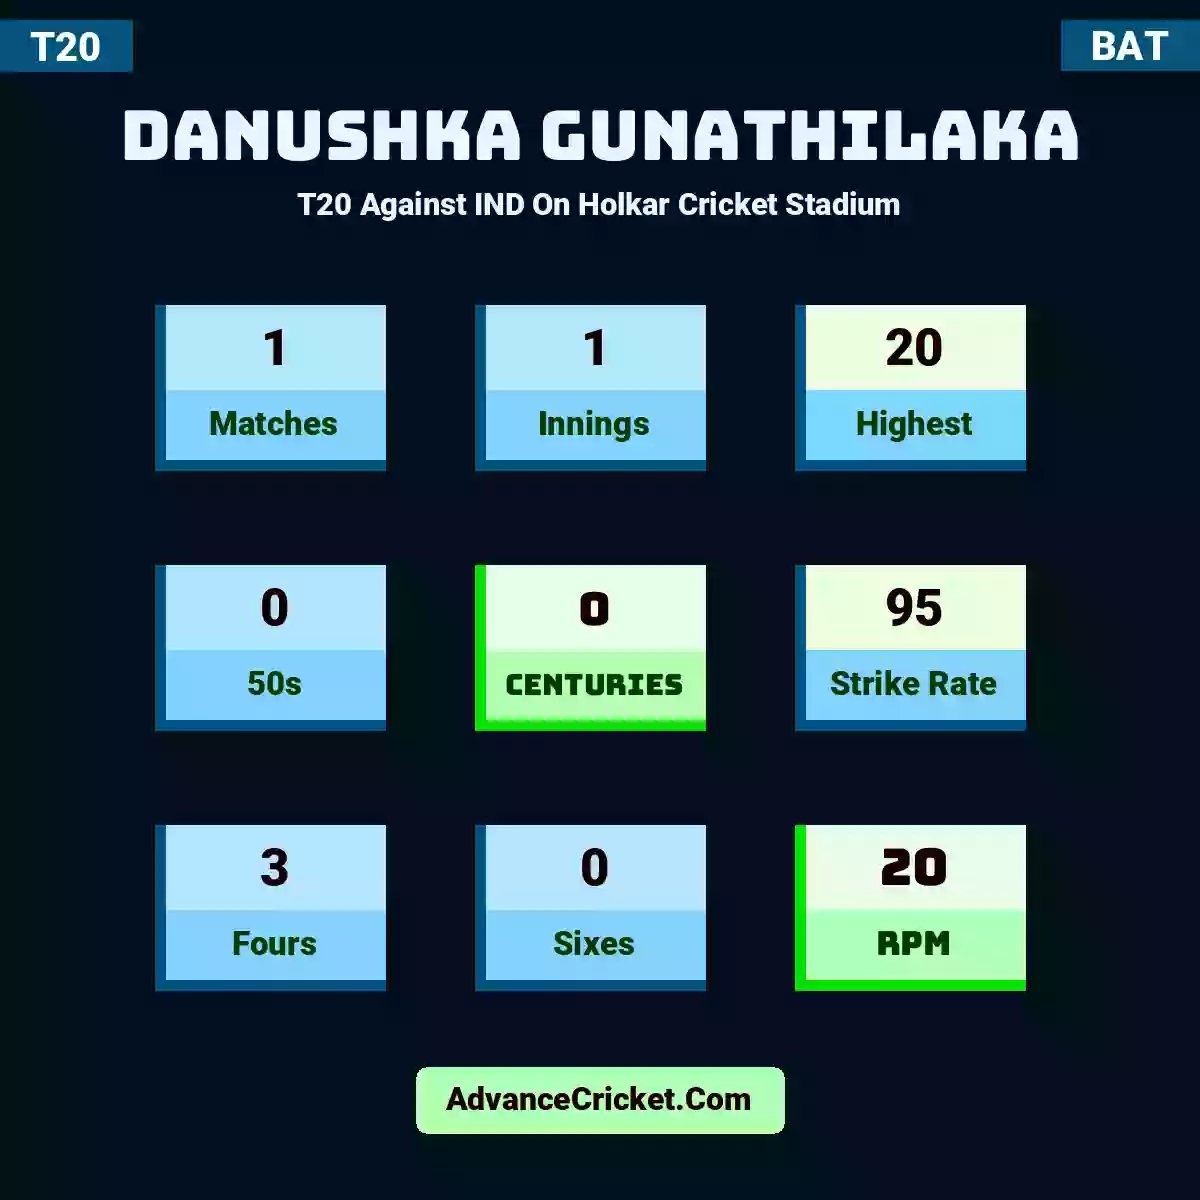 Danushka Gunathilaka T20  Against IND On Holkar Cricket Stadium, Danushka Gunathilaka played 1 matches, scored 20 runs as highest, 0 half-centuries, and 0 centuries, with a strike rate of 95. D.Gunathilaka hit 3 fours and 0 sixes, with an RPM of 20.